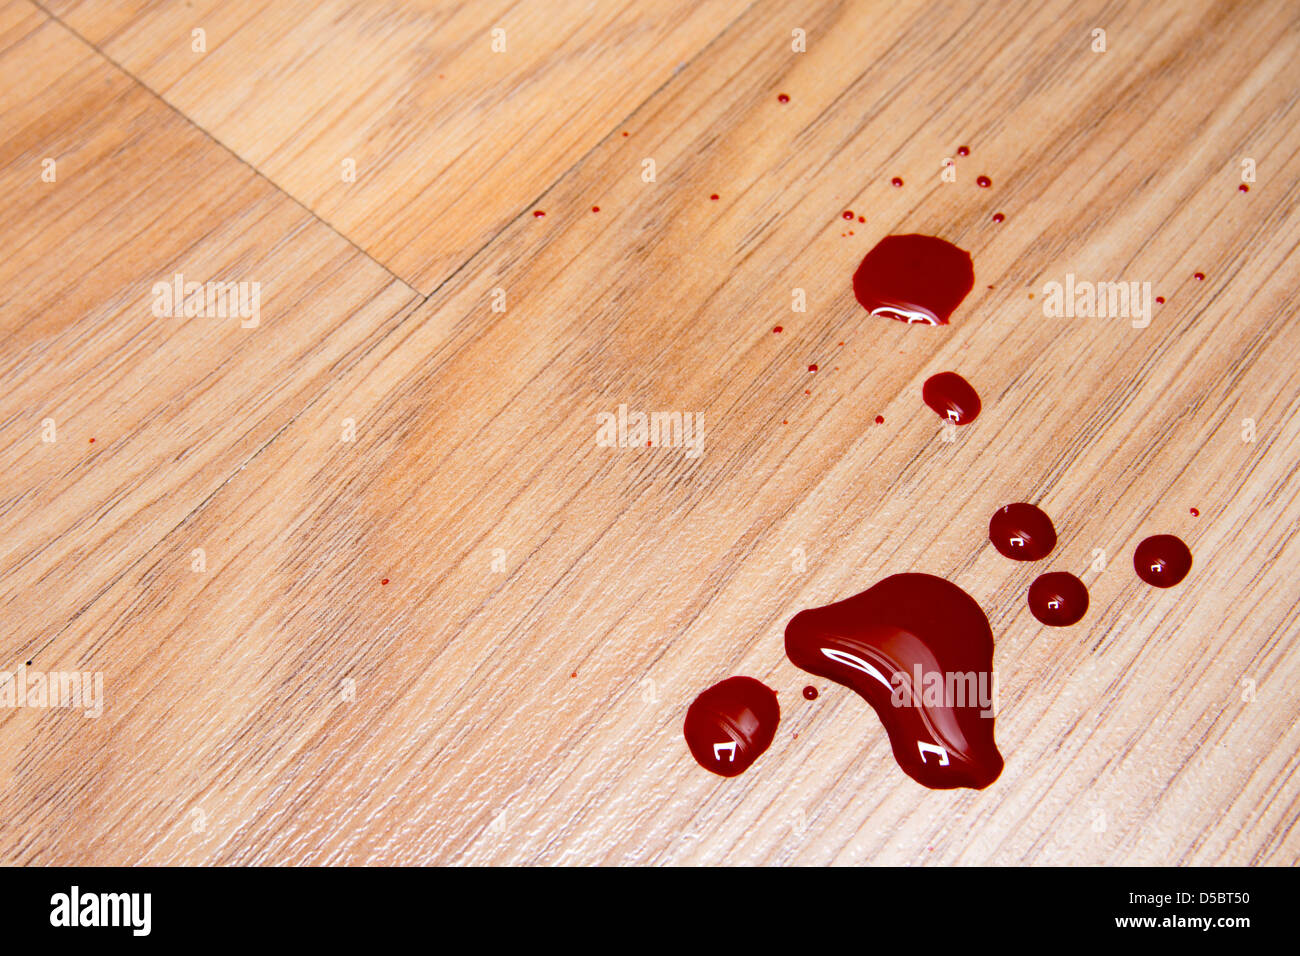 Drops of blood on laminate floor texture Stock Photo